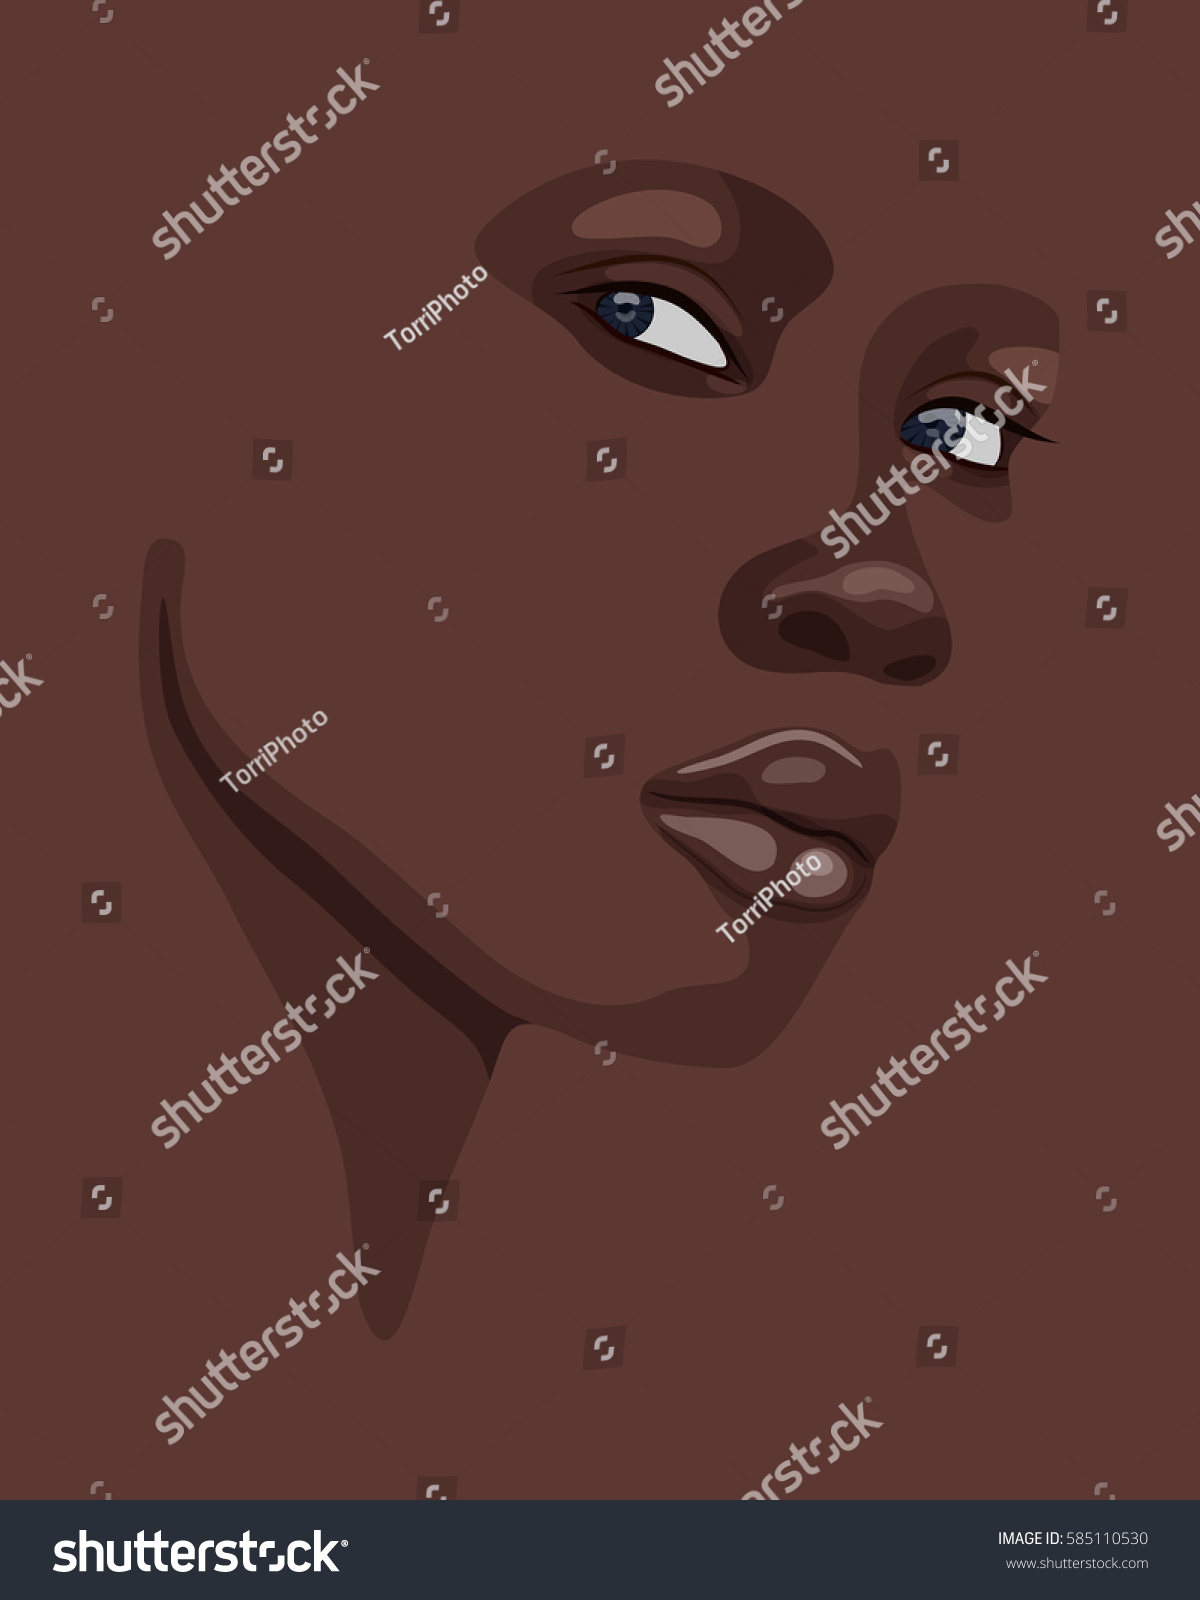 https://www.shutterstock.com/image-vector/fashion-portrait-beautiful-african-woman-shadow-585110530